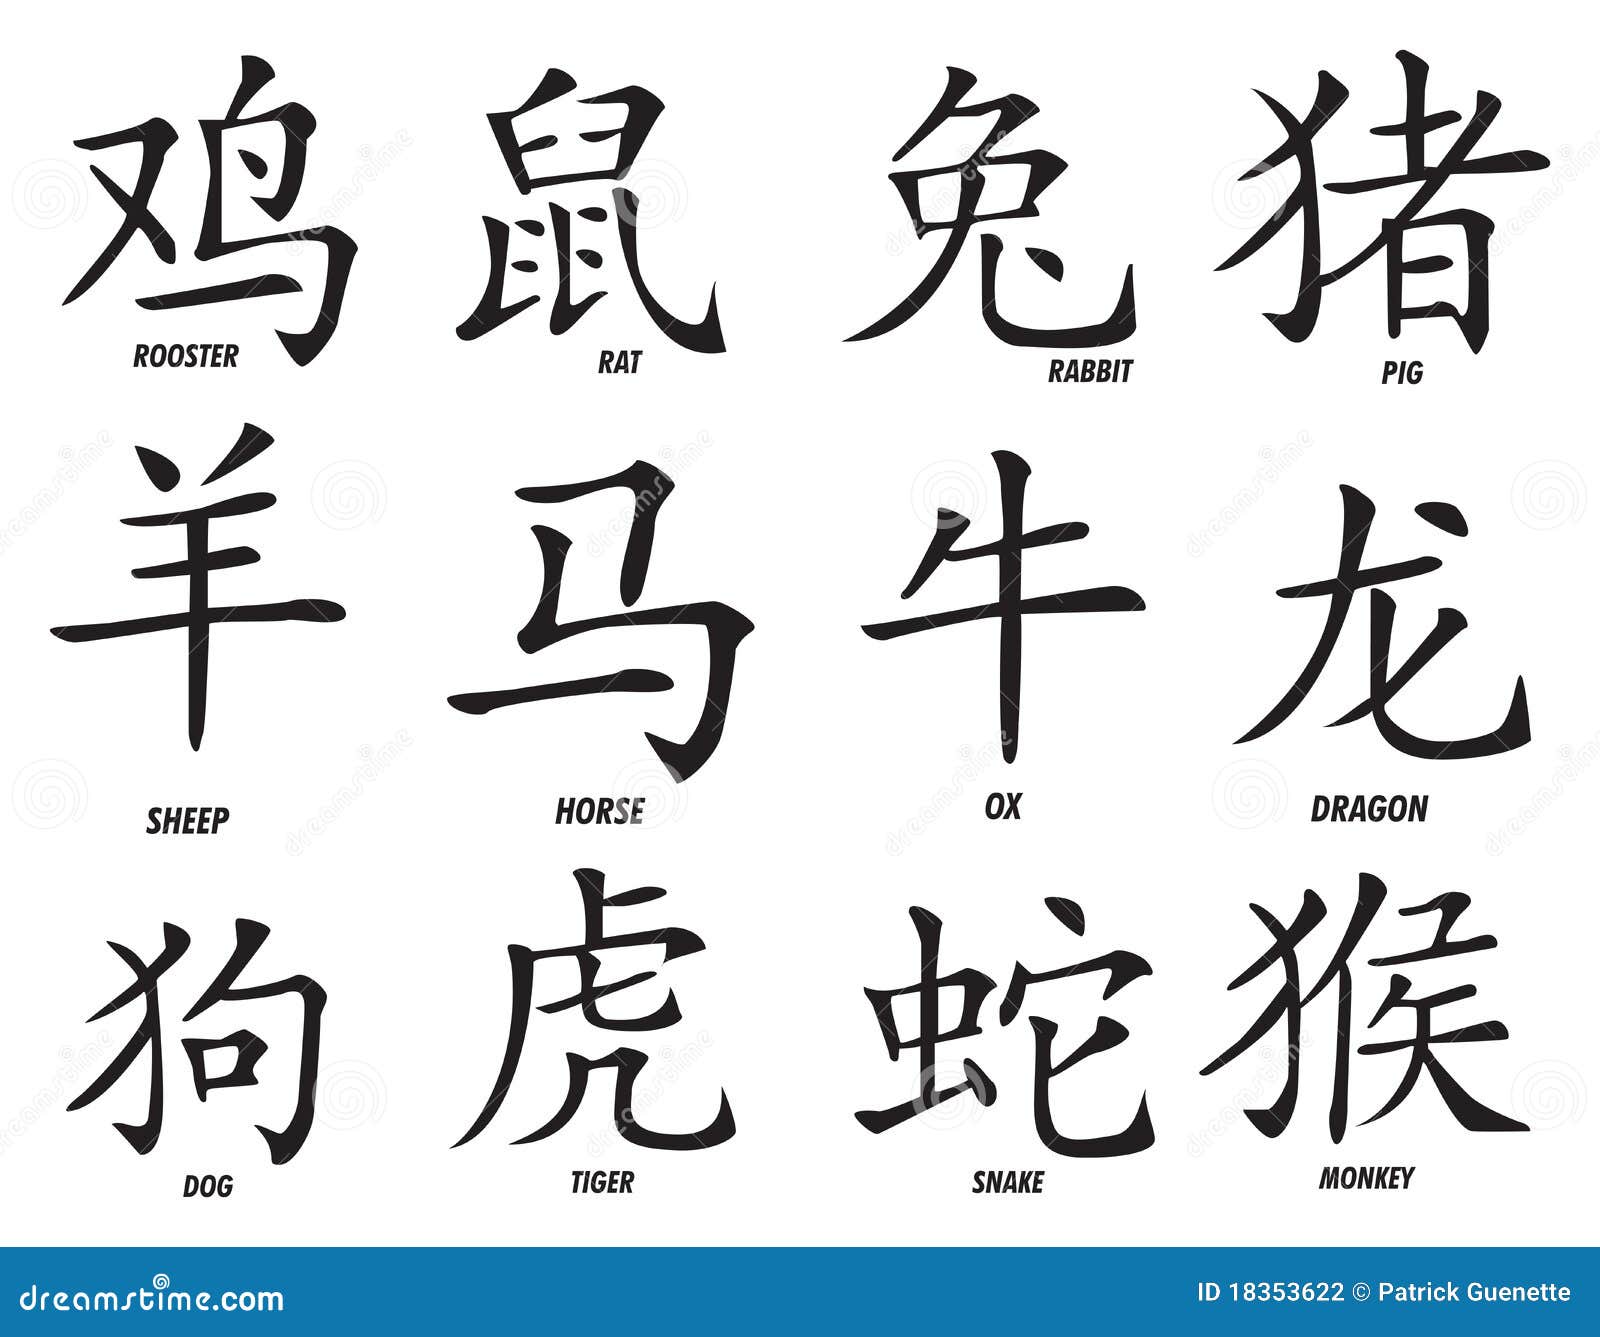 twelve-chinese-zodiac-signs-18353622.jpg